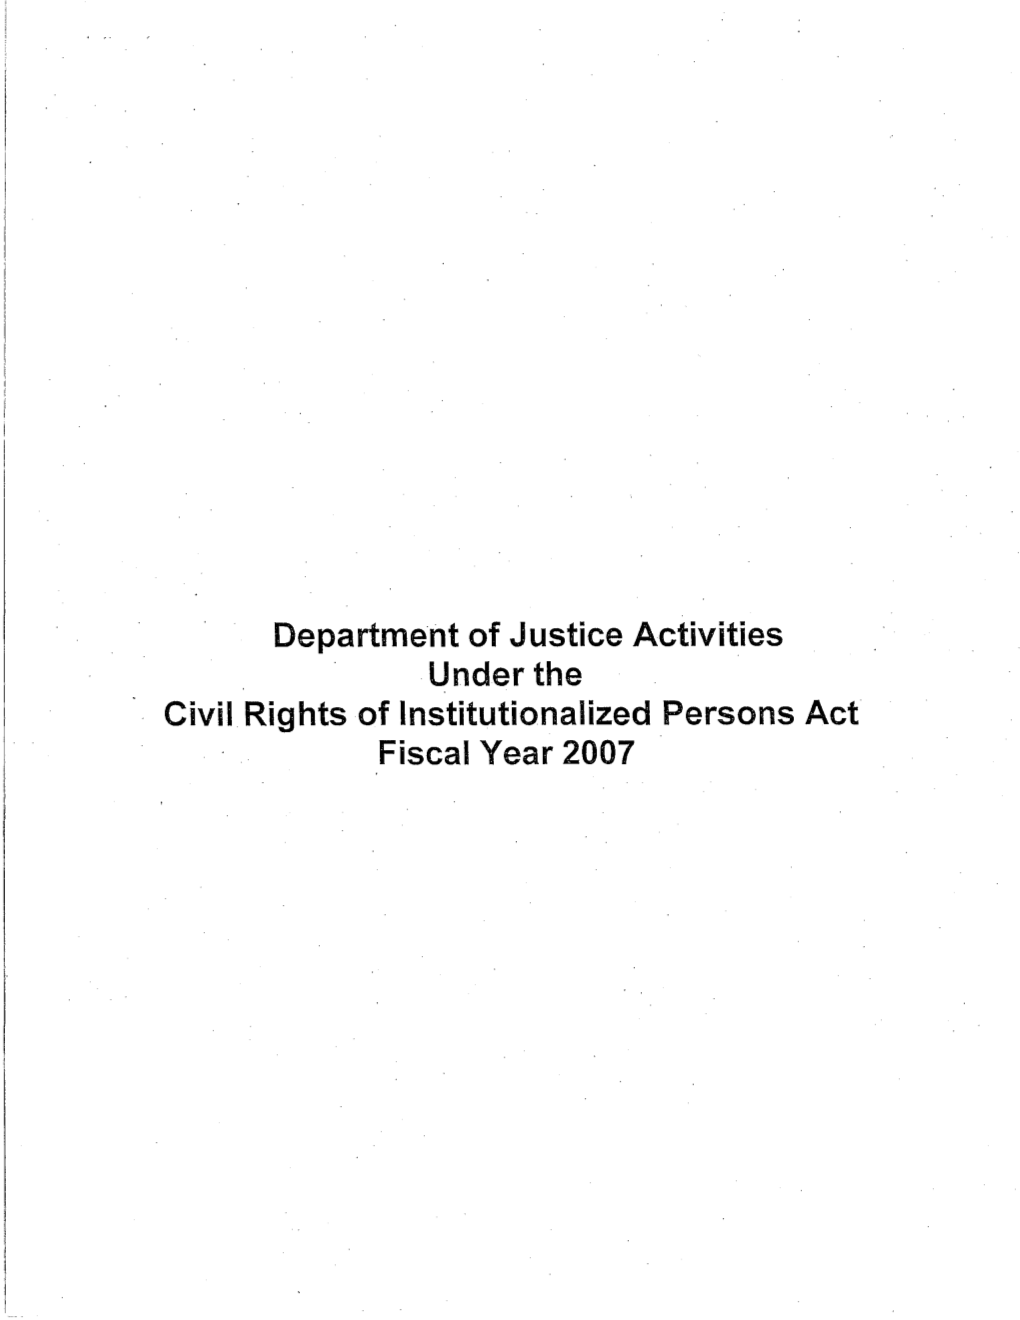 DOJ Activities CRIPA Fiscal Year 2007